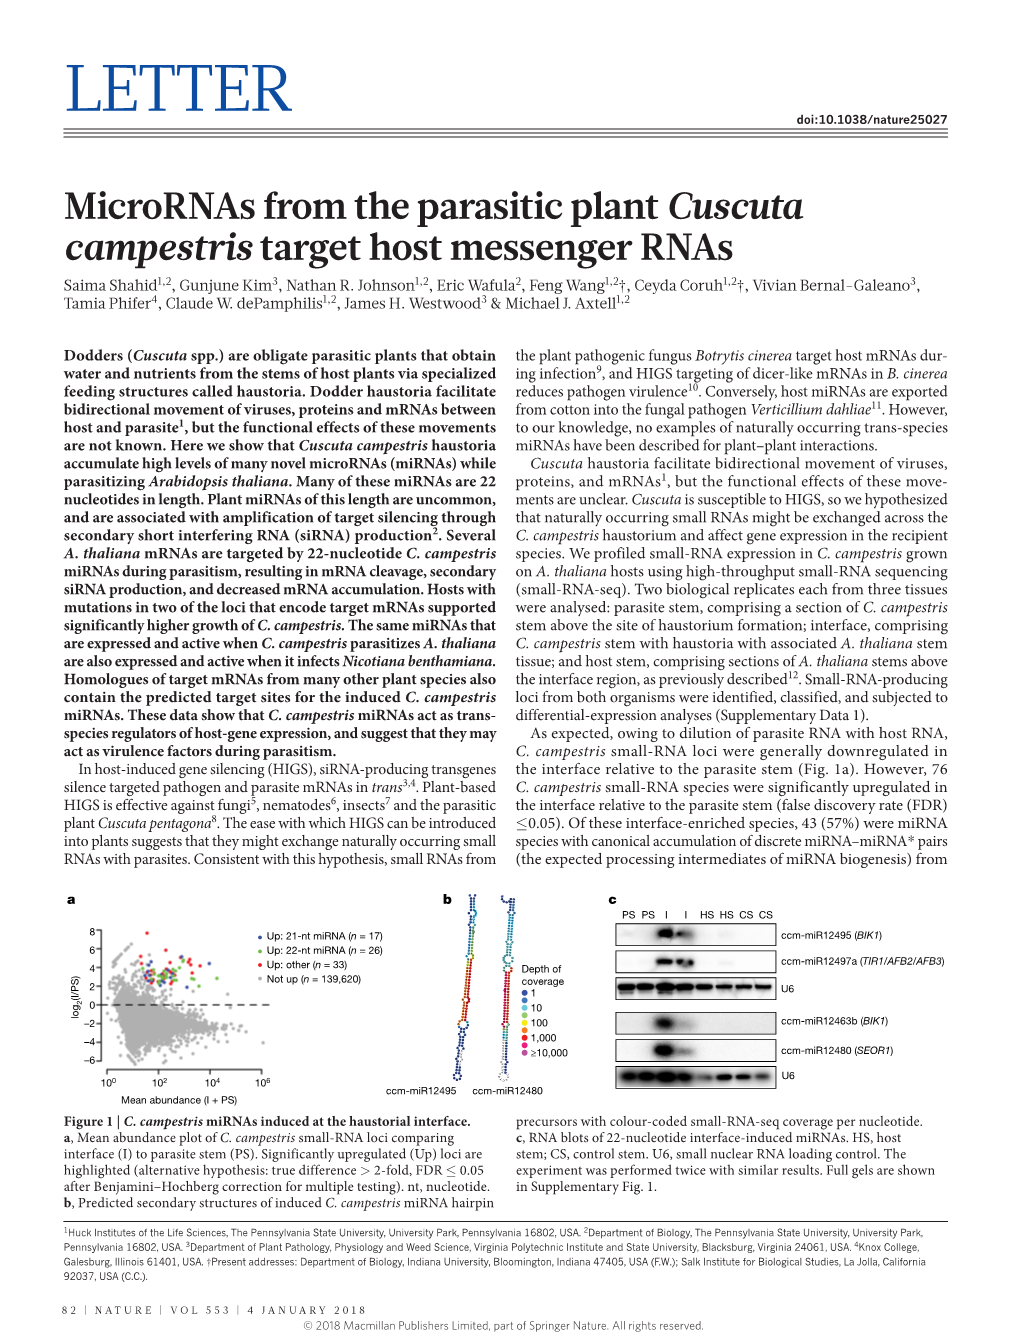 Micrornas from the Parasitic Plant Cuscuta Campestris Target Host Messenger Rnas Saima Shahid1,2, Gunjune Kim3, Nathan R